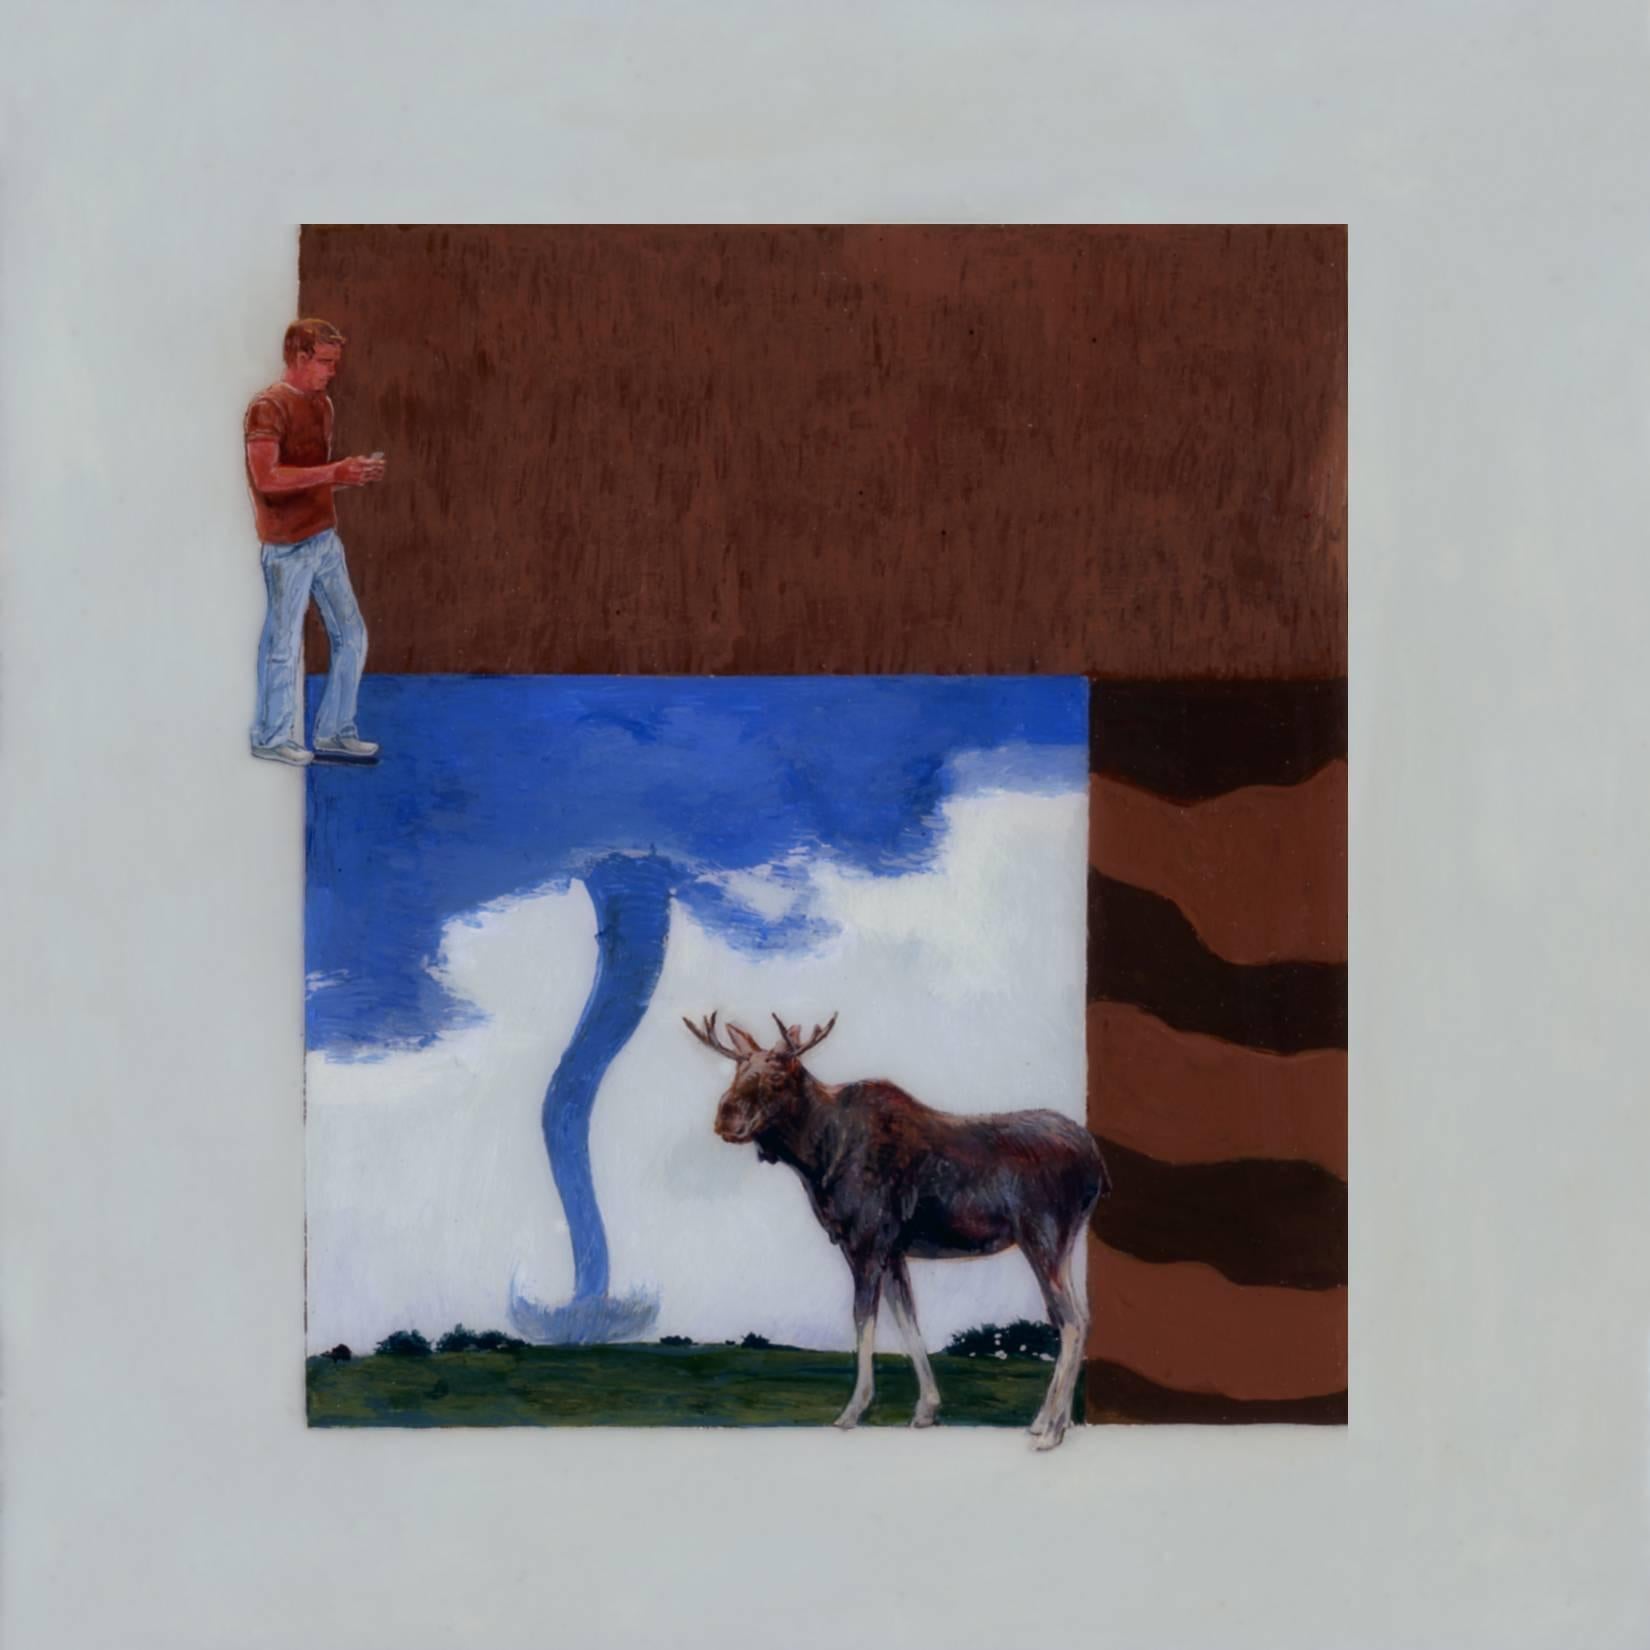 Adam Mysock Figurative Painting - Davie Crockett, Pecos Bill, the Bull Moose Party, and a Man Walking into Frame